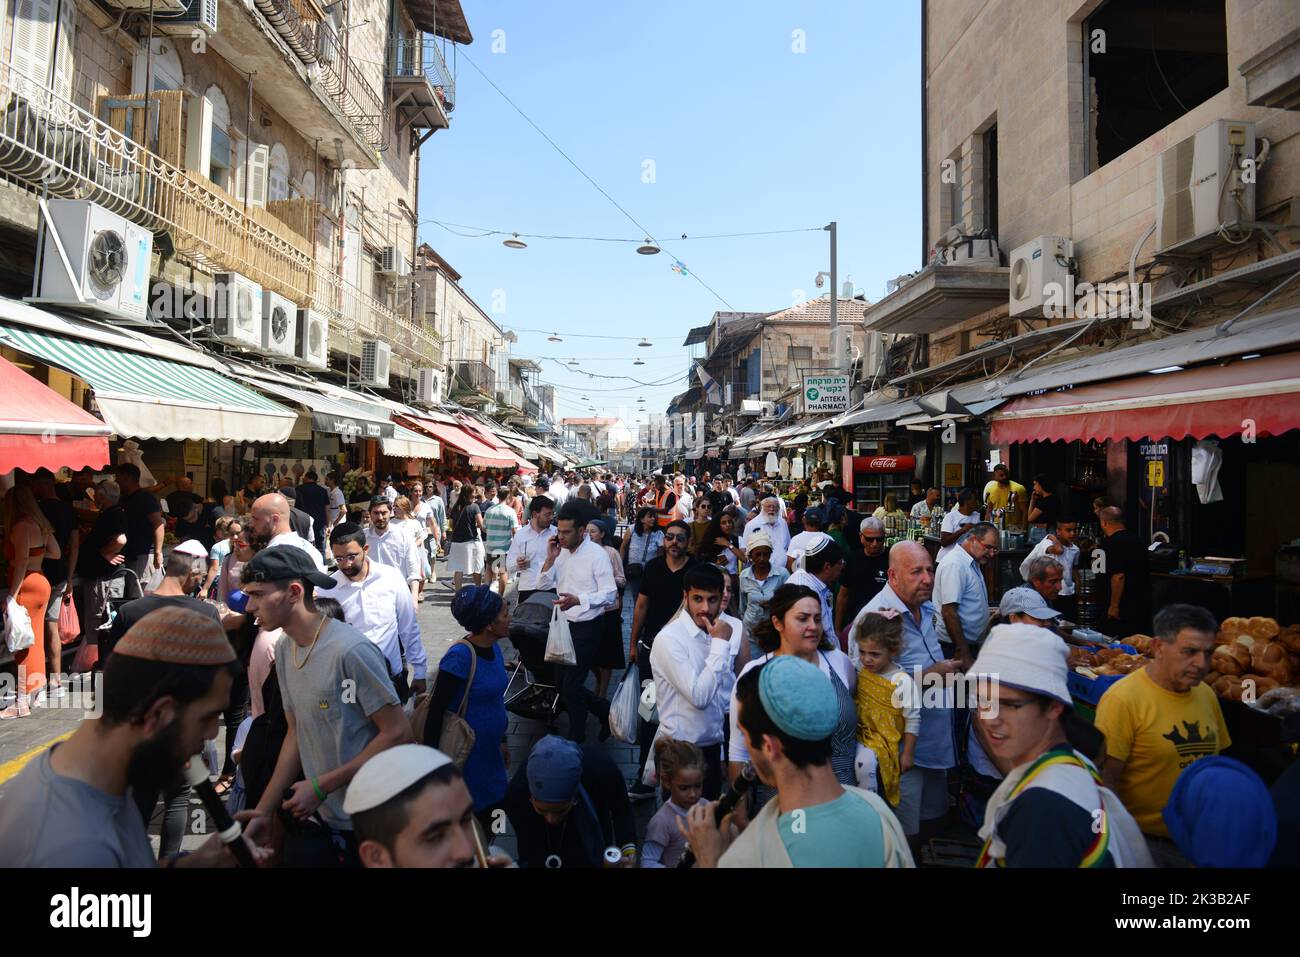 The vibrant Mahane Yehuda market in Jerusalem, Israel. Stock Photo